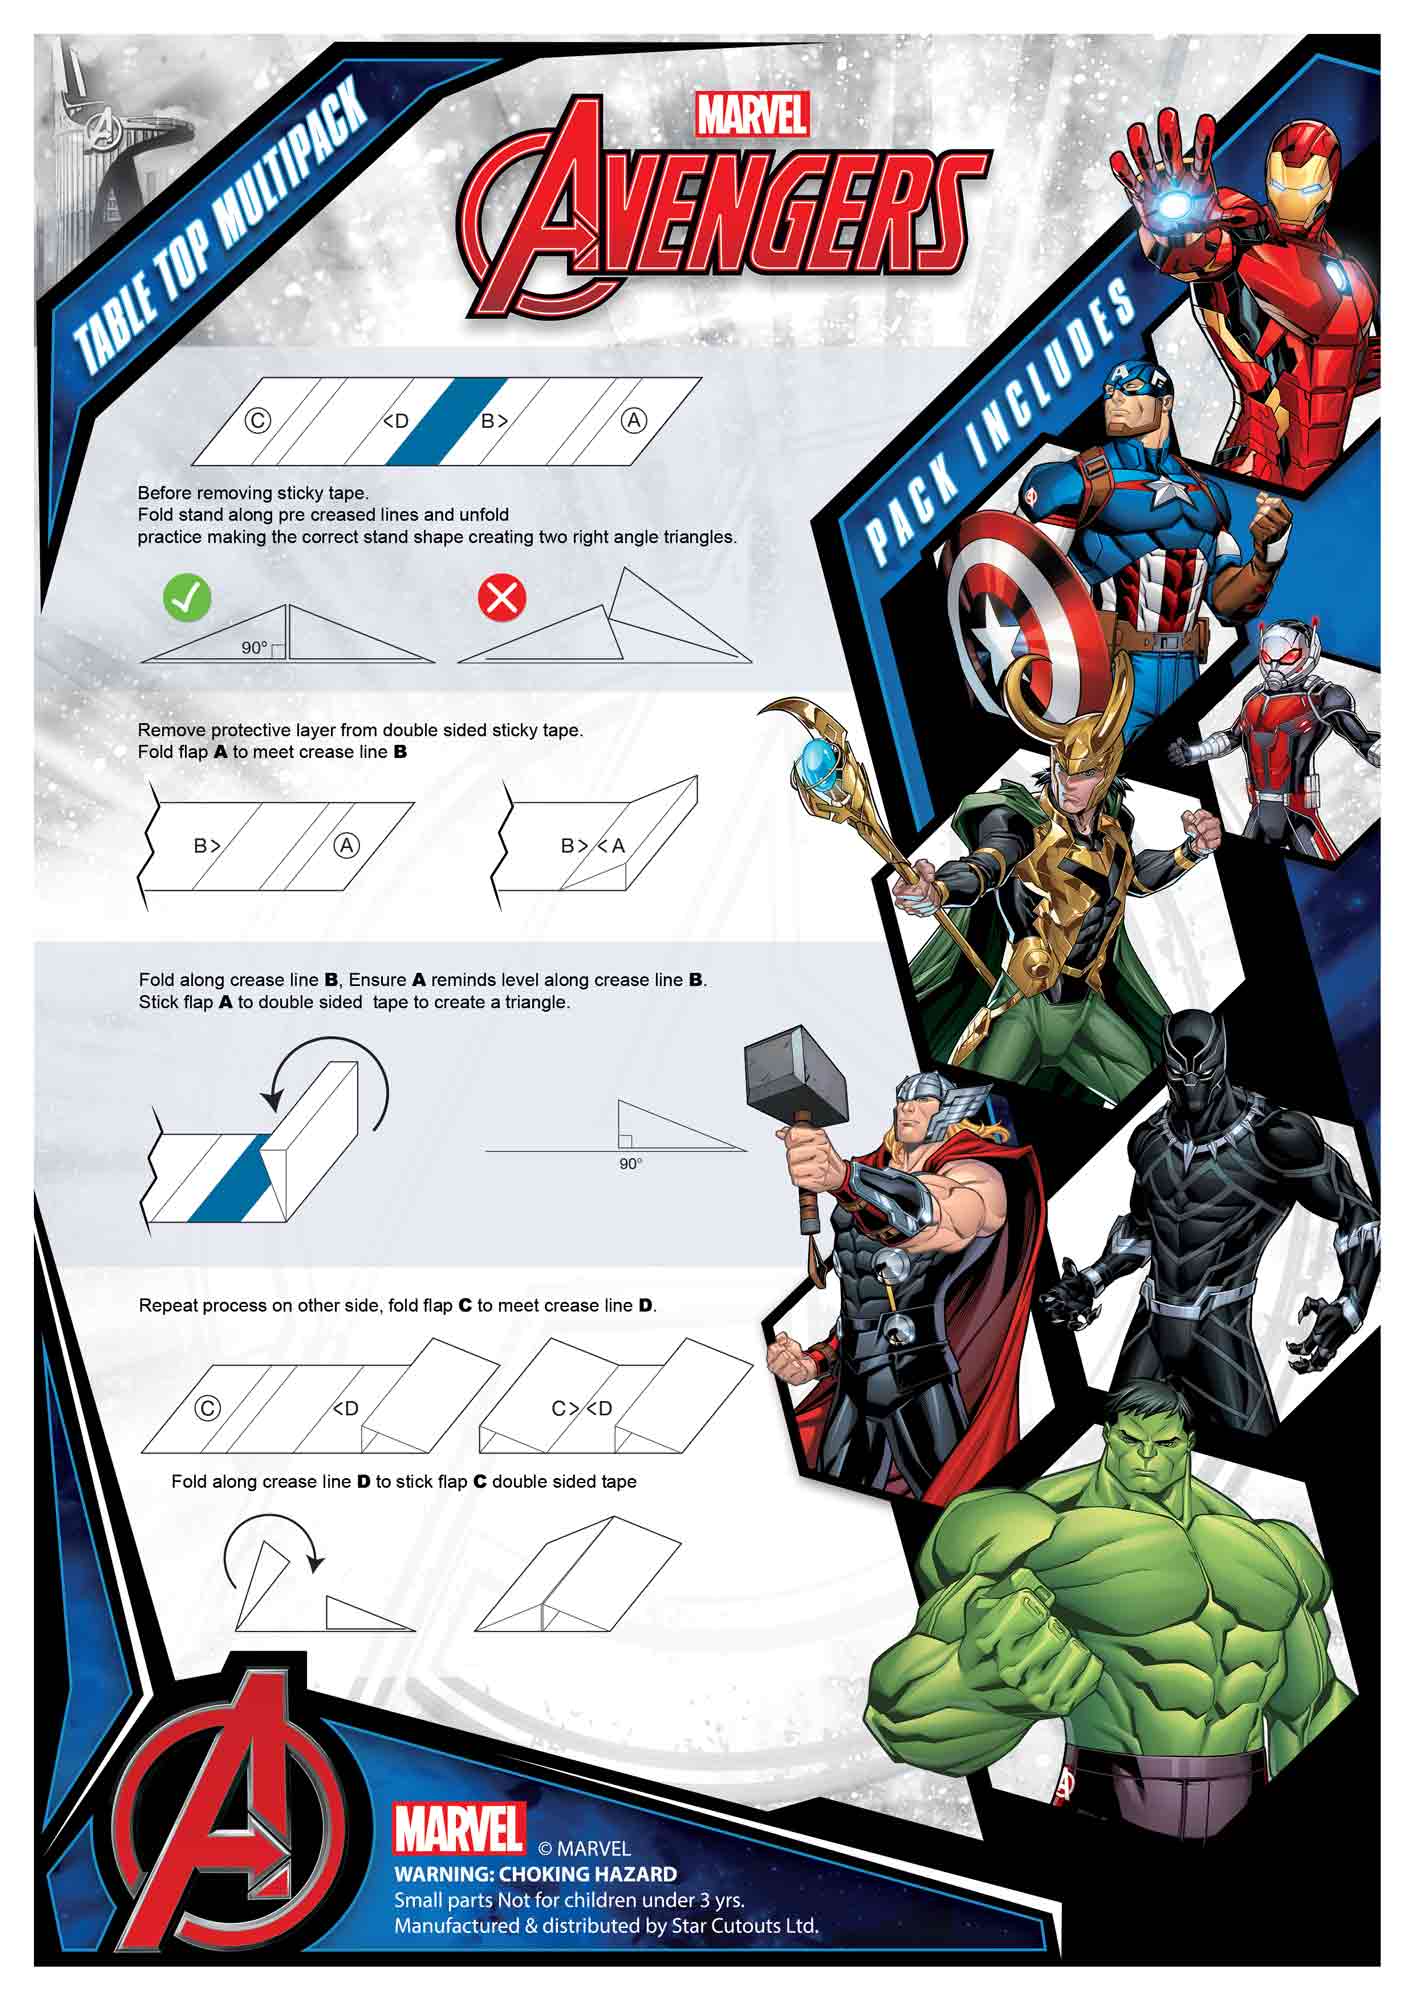 Marvel Avengers (Animation/ Cartoon) Table Top Pack